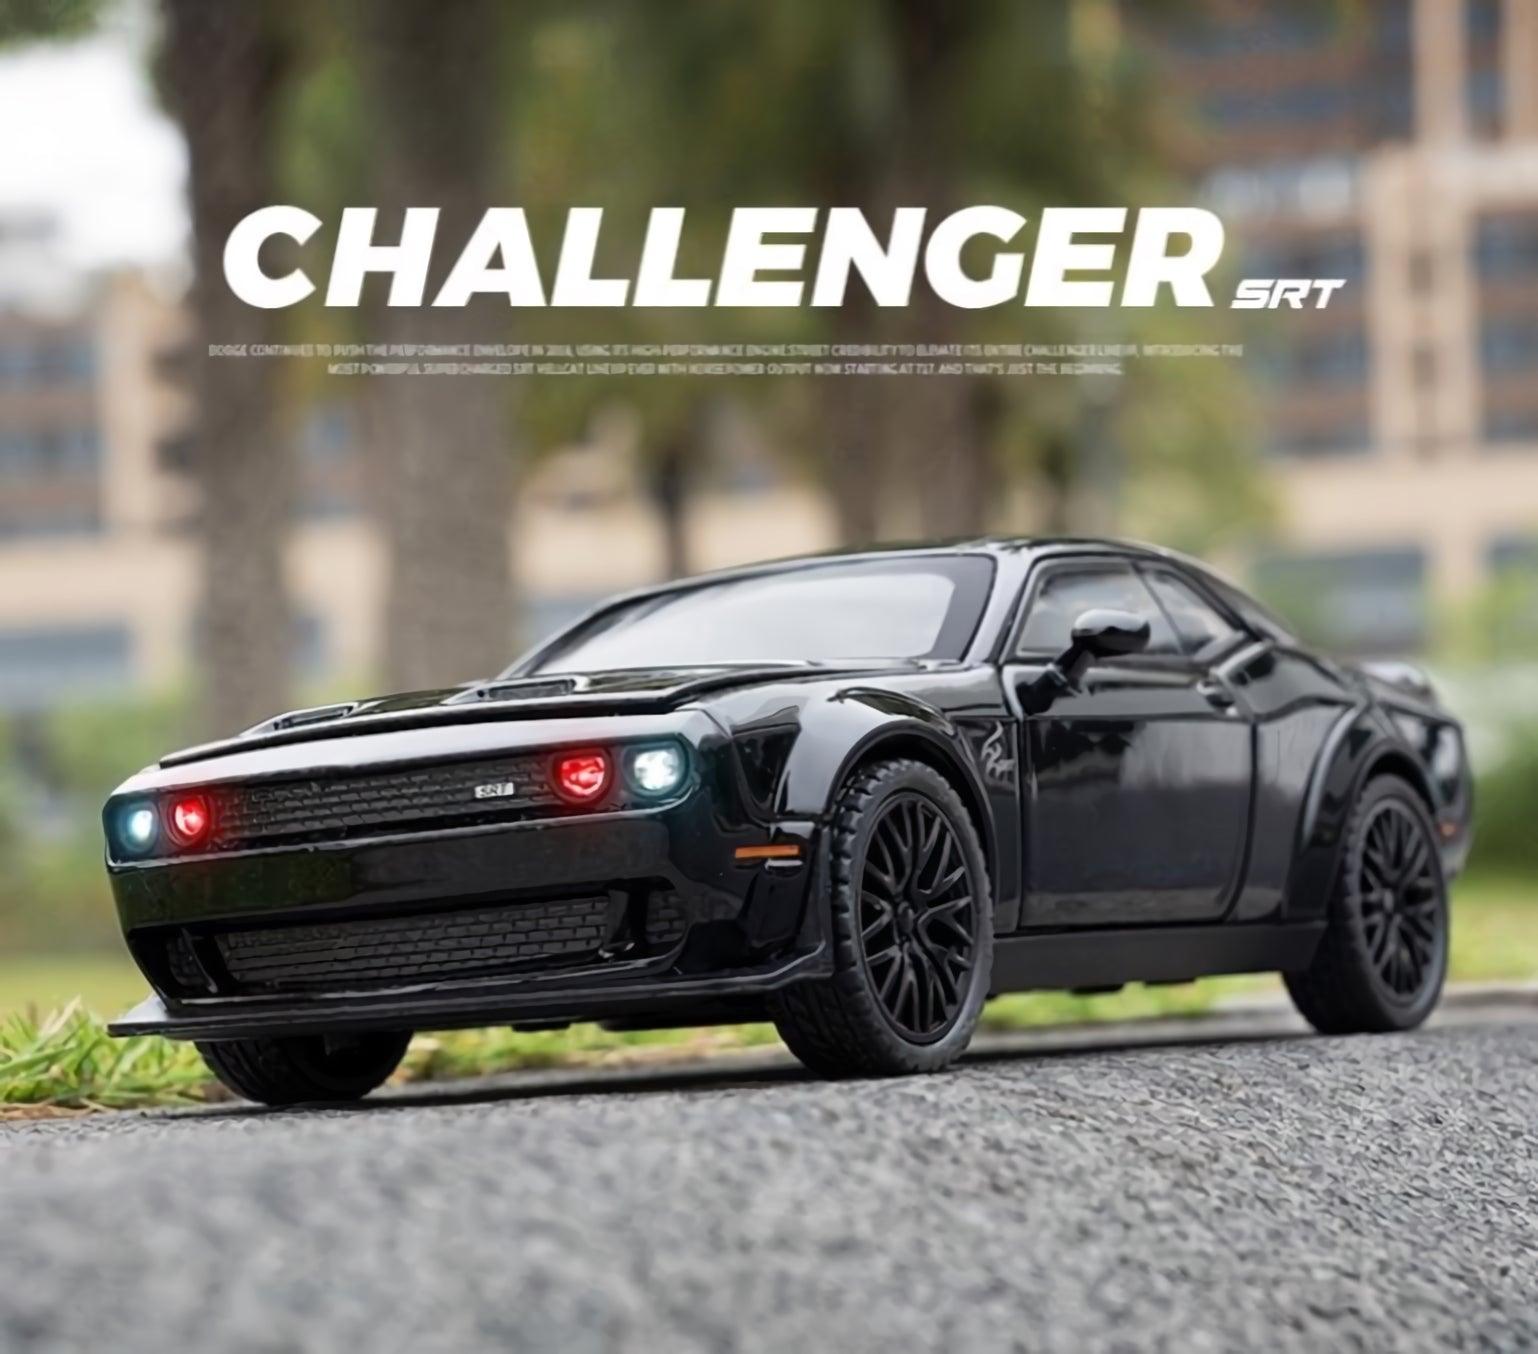 1:32 Scale Challenger SRT Die-Cast Model Car - PANSEKtoy